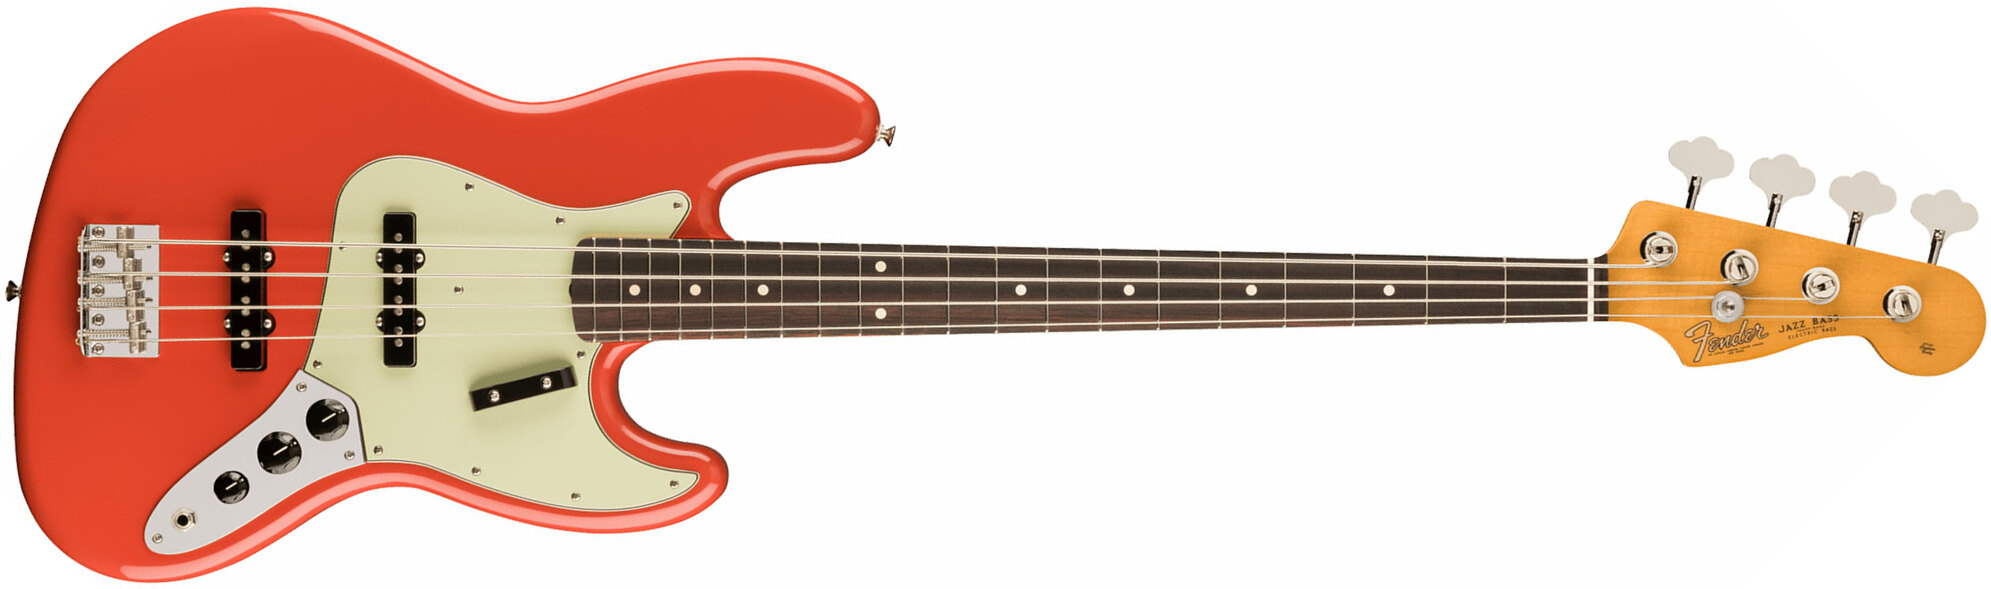 Fender Jazz Bass 60s Vintera Ii Mex Rw - Fiesta Red - Basse Électrique Solid Body - Main picture